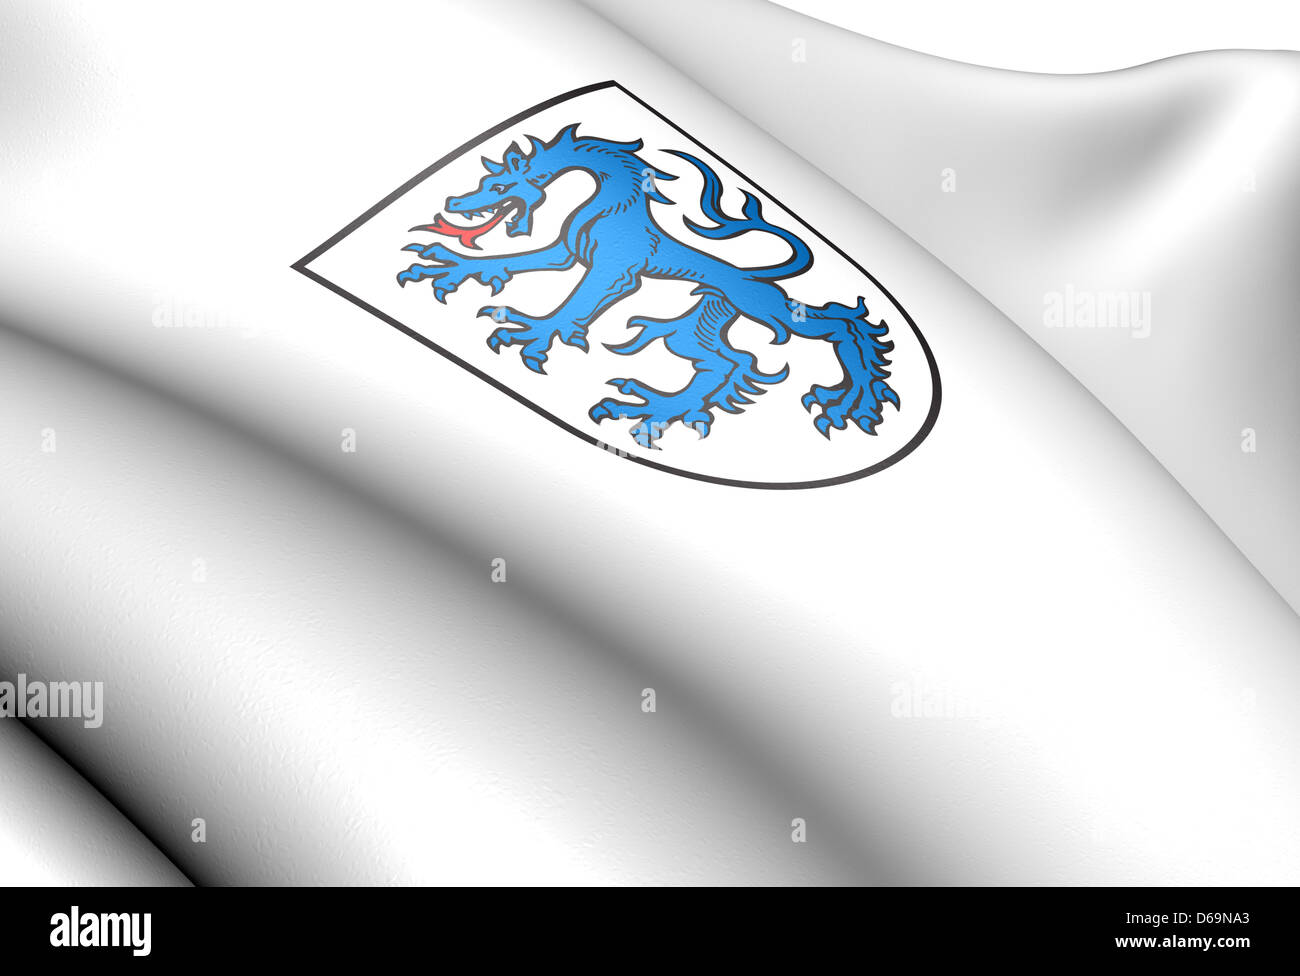 Ingolstadt coat of arms Stock Photo